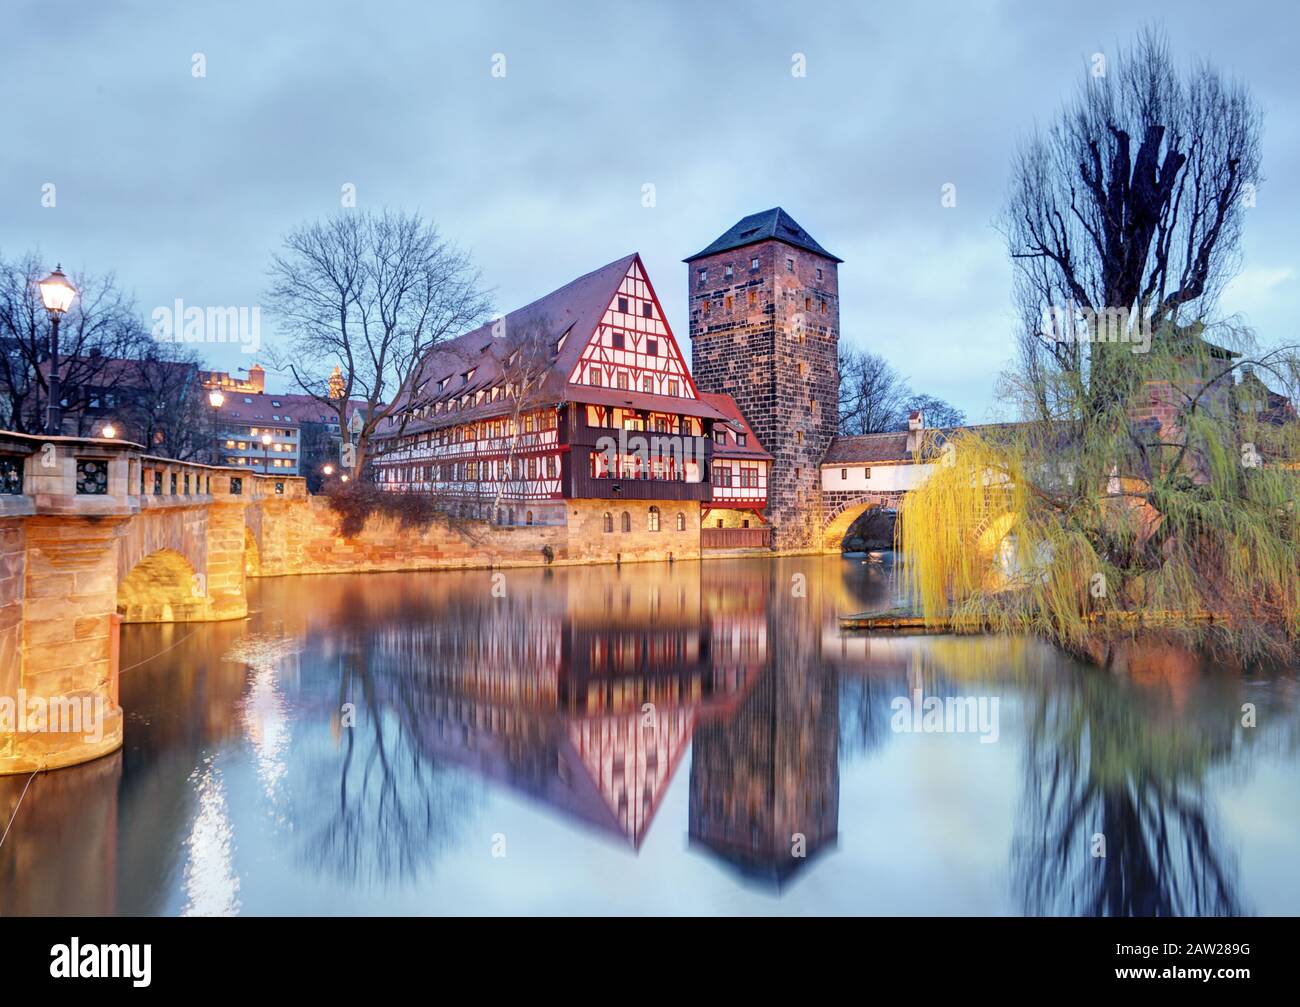 Nuremberg, Germany at Bridge. Stock Photo